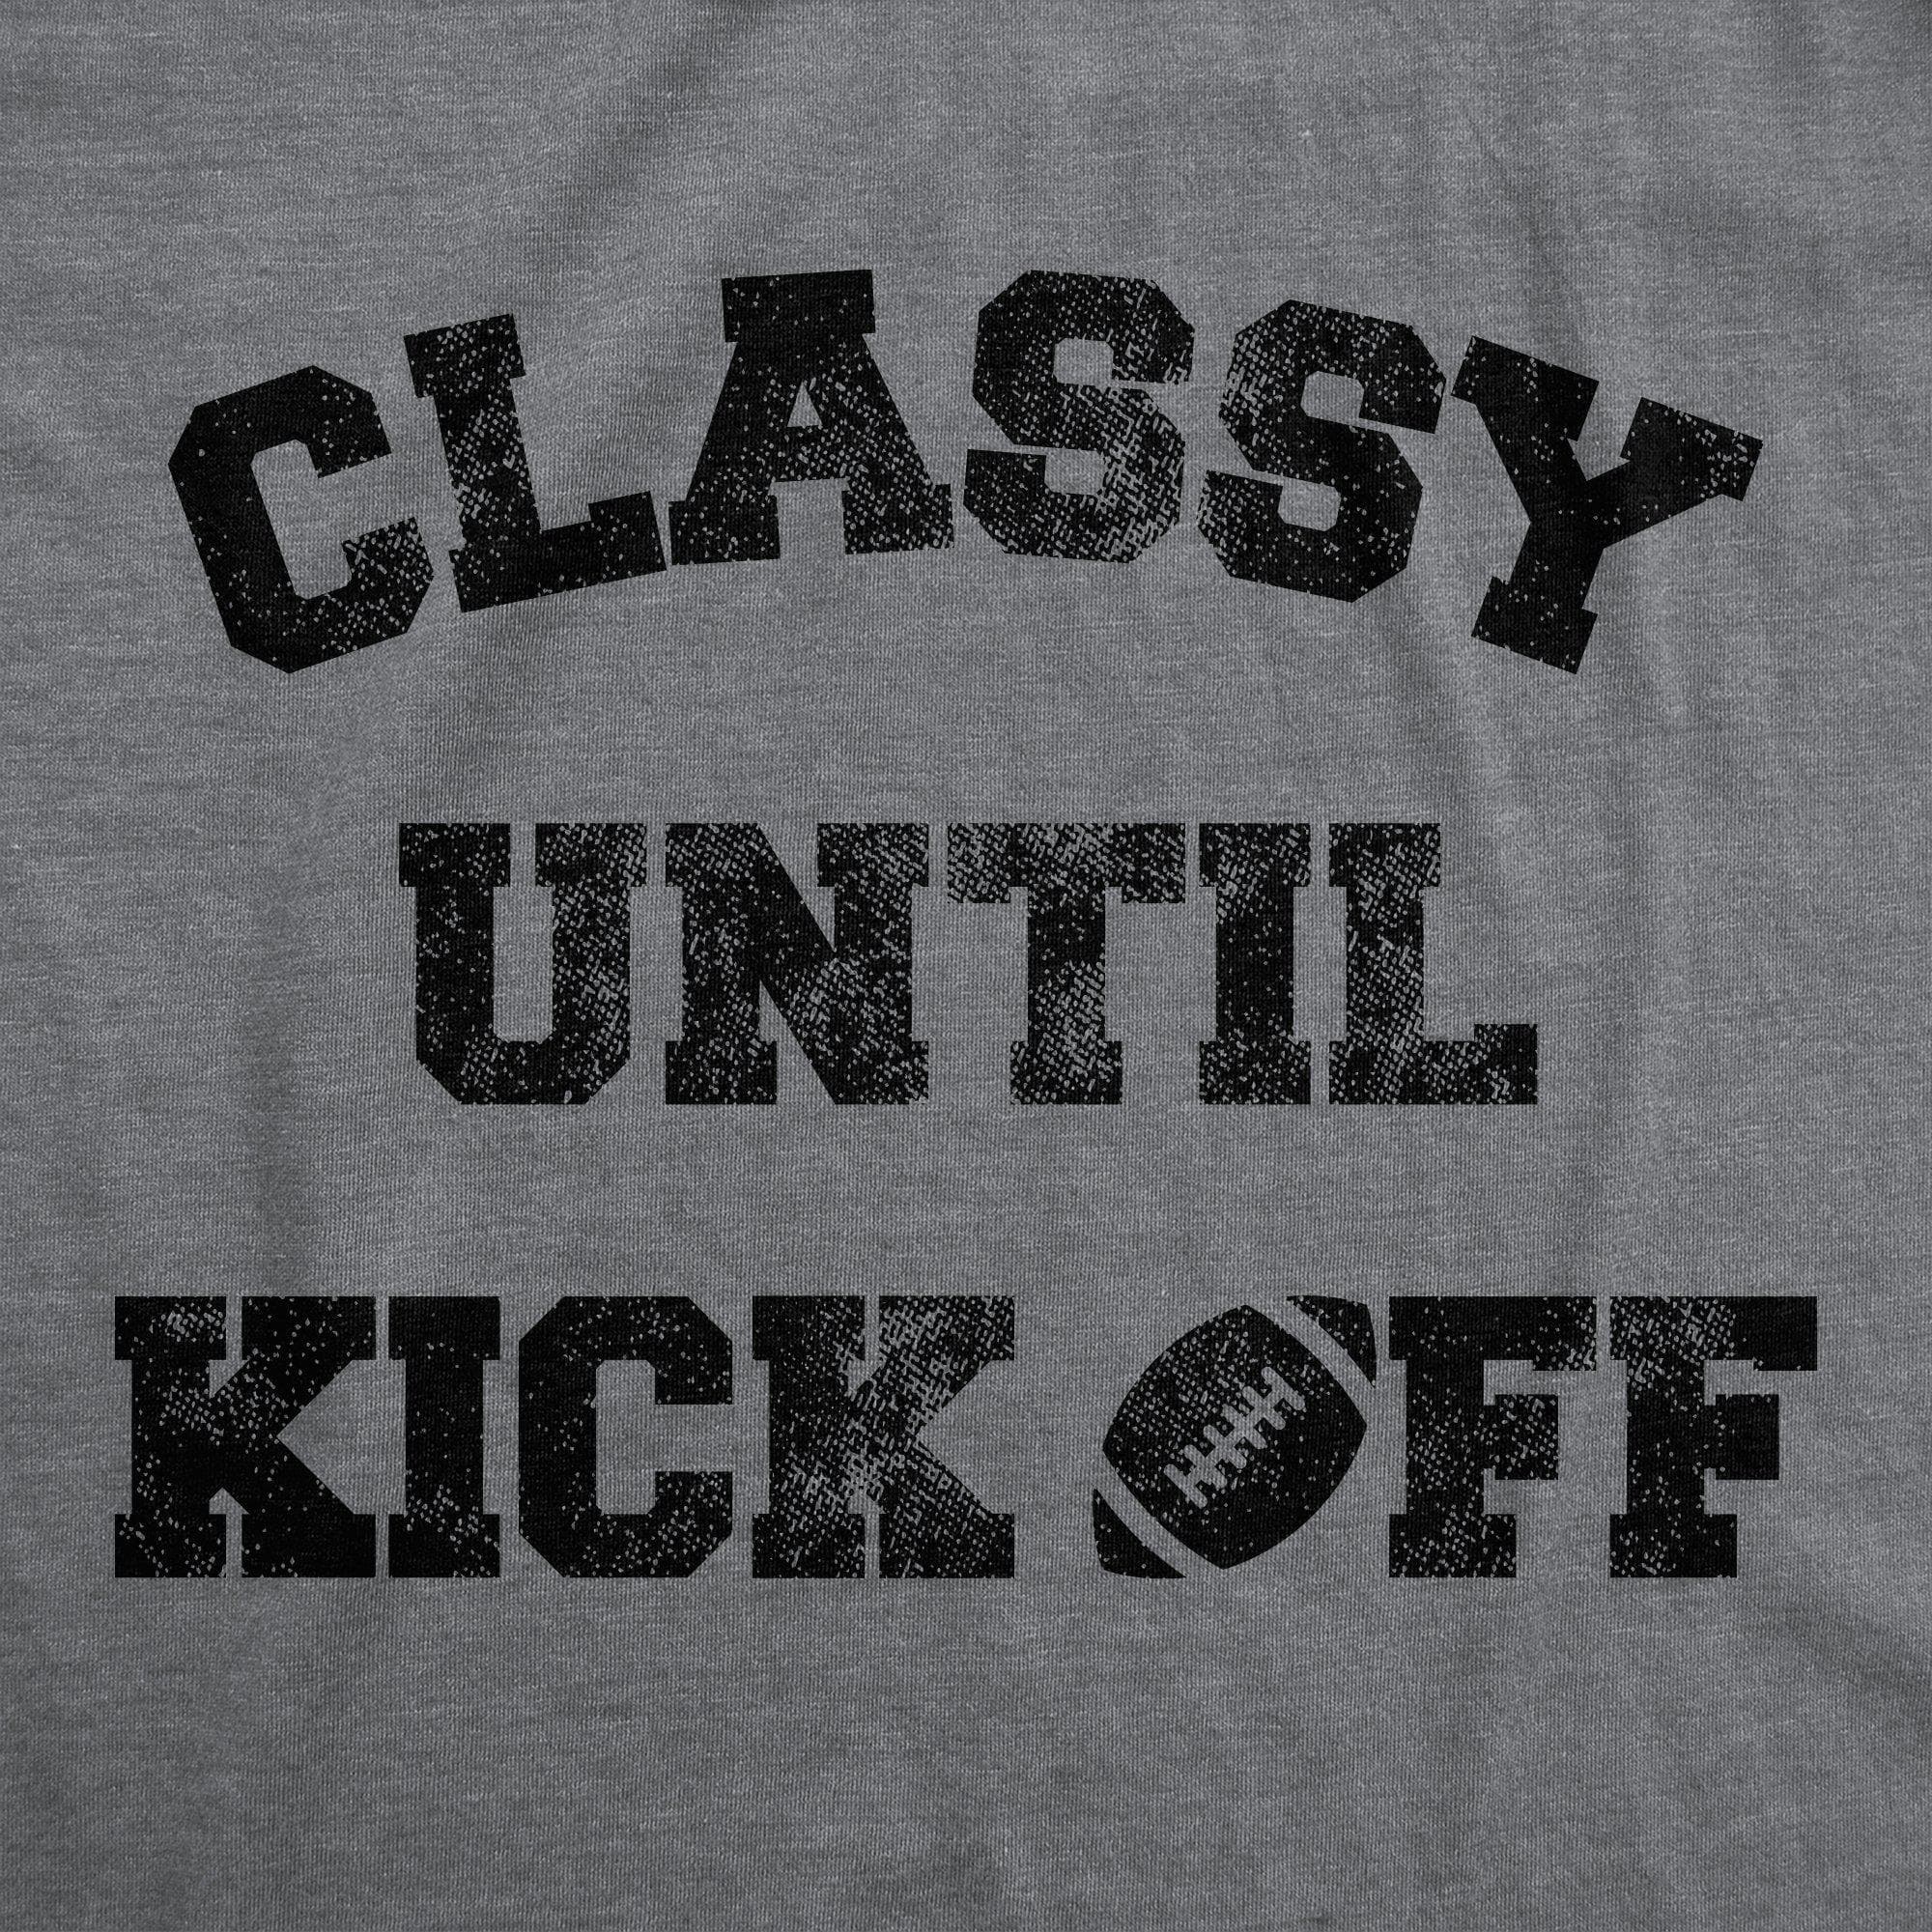 Classy Until Kickoff Women's Tshirt - Crazy Dog T-Shirts